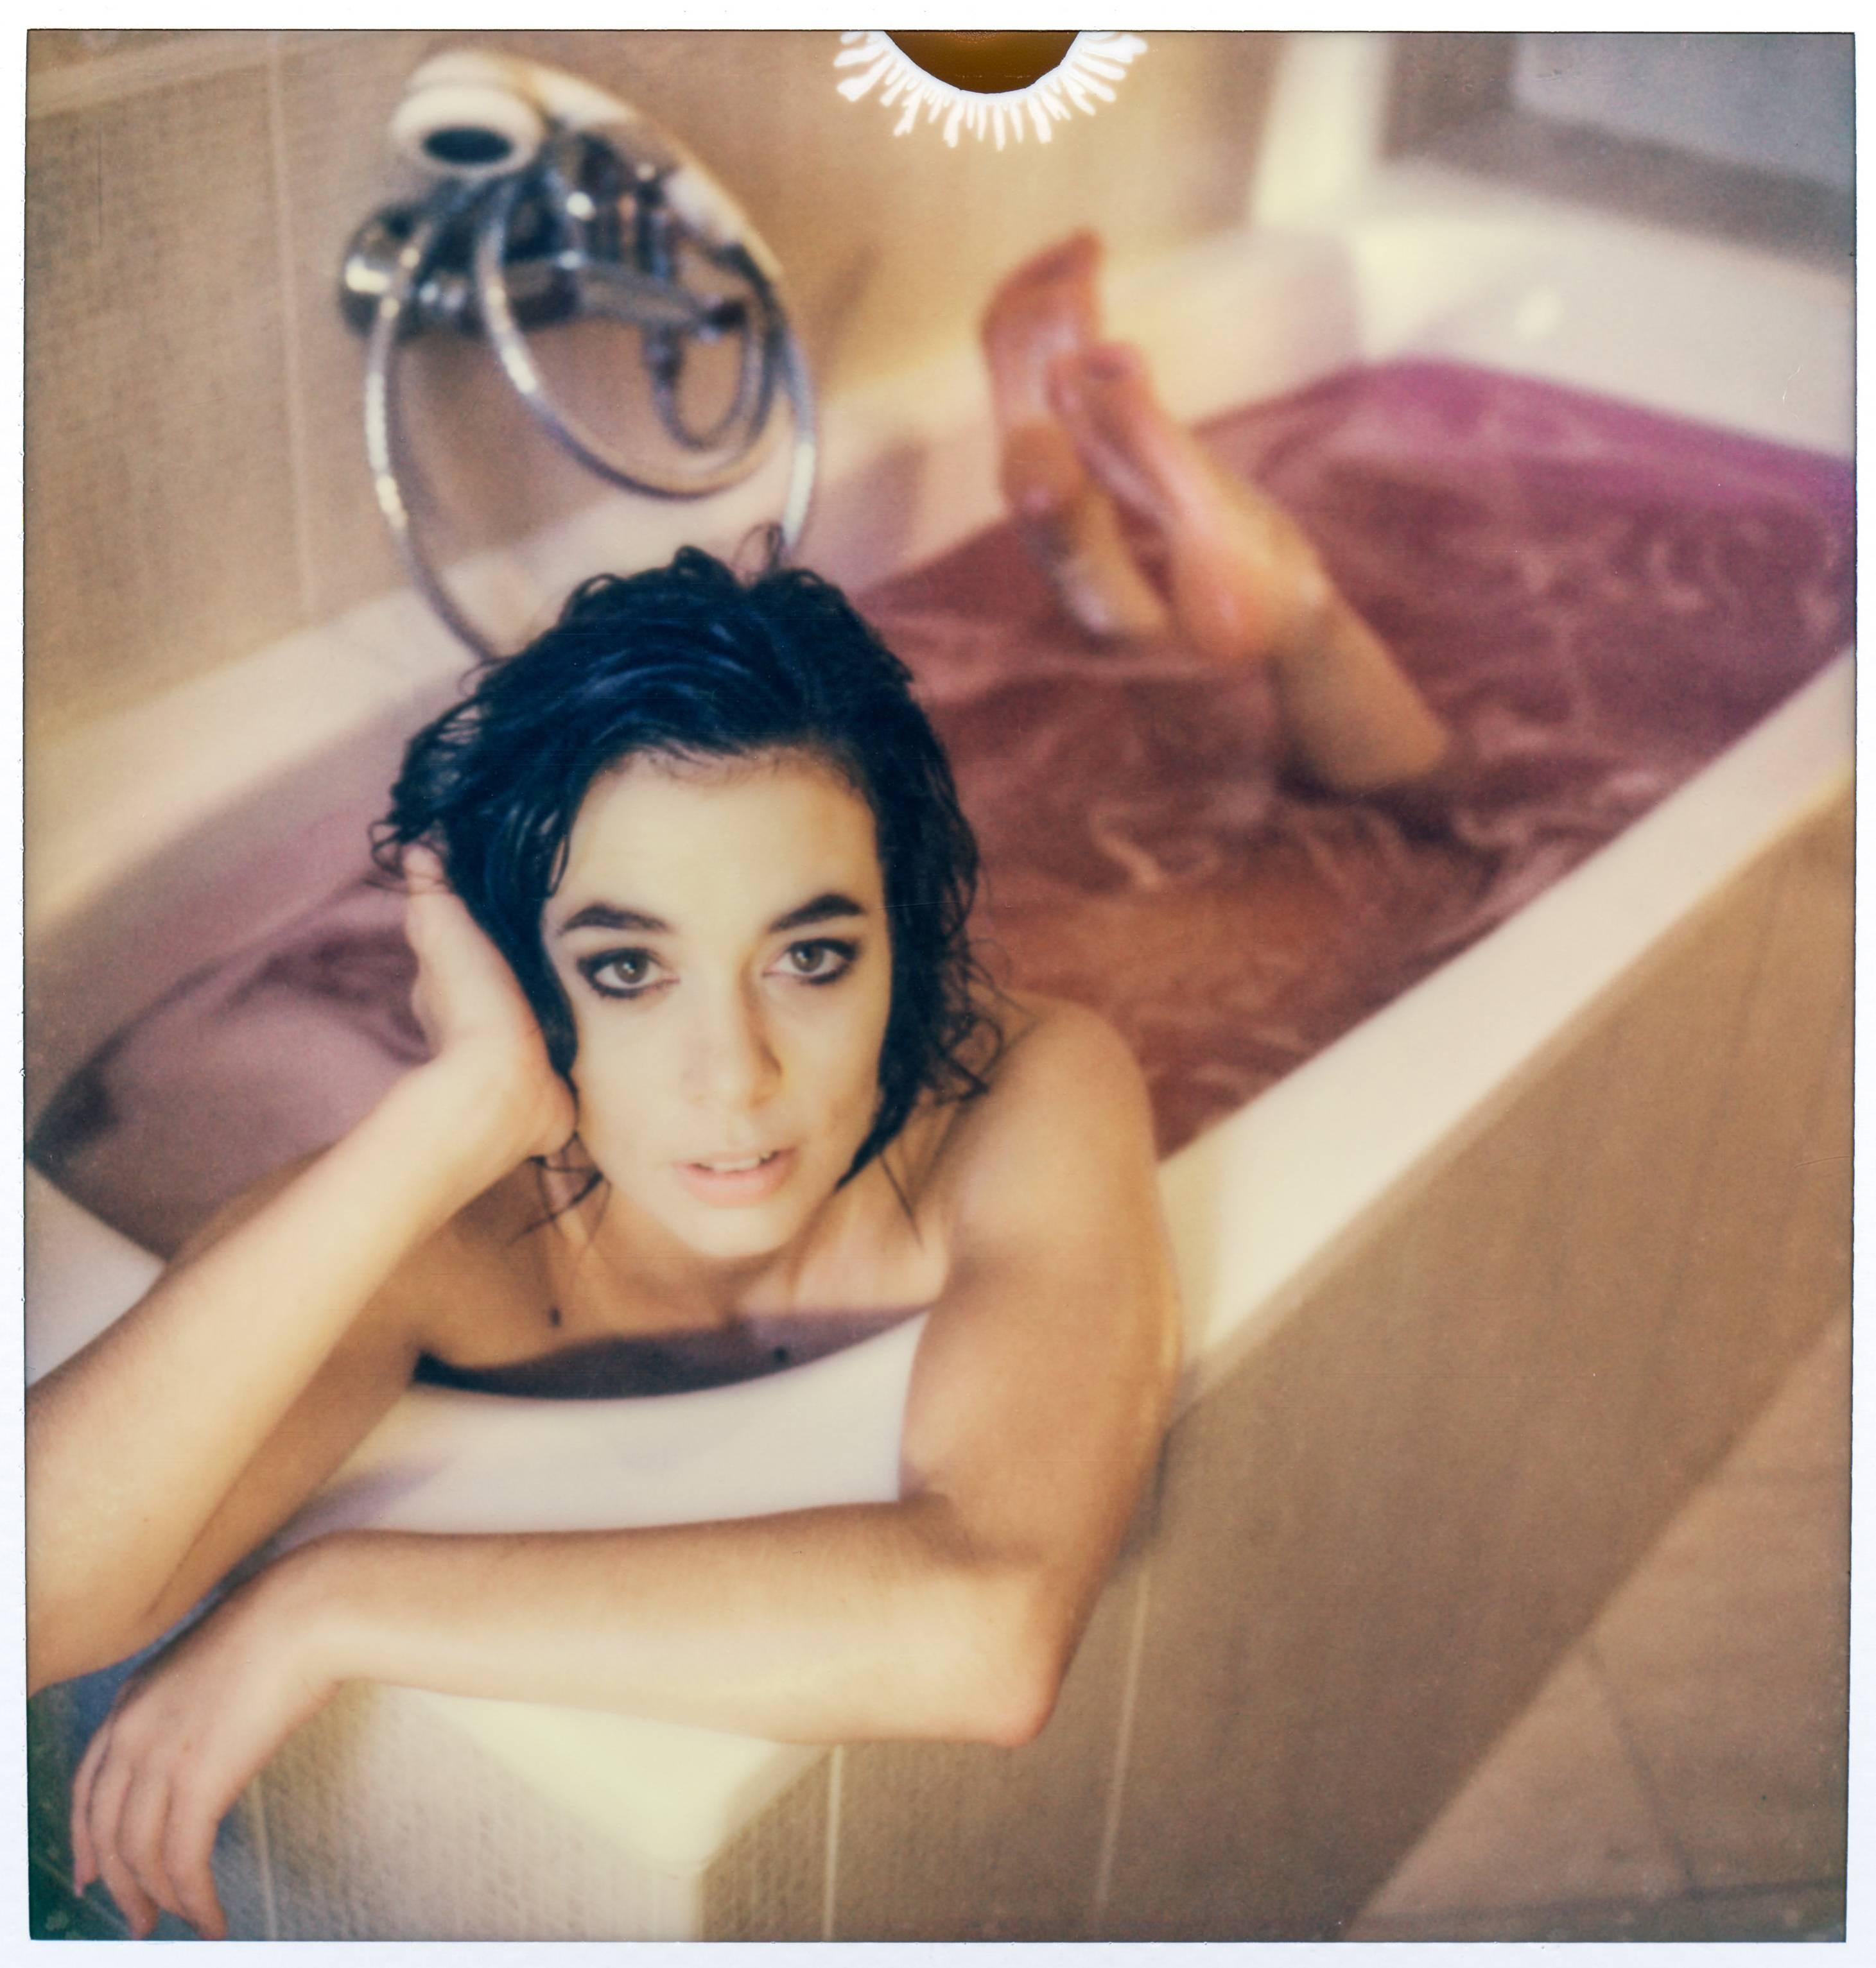 Kirsten Thys van den Audenaerde Nude Photograph - Bath Time Story